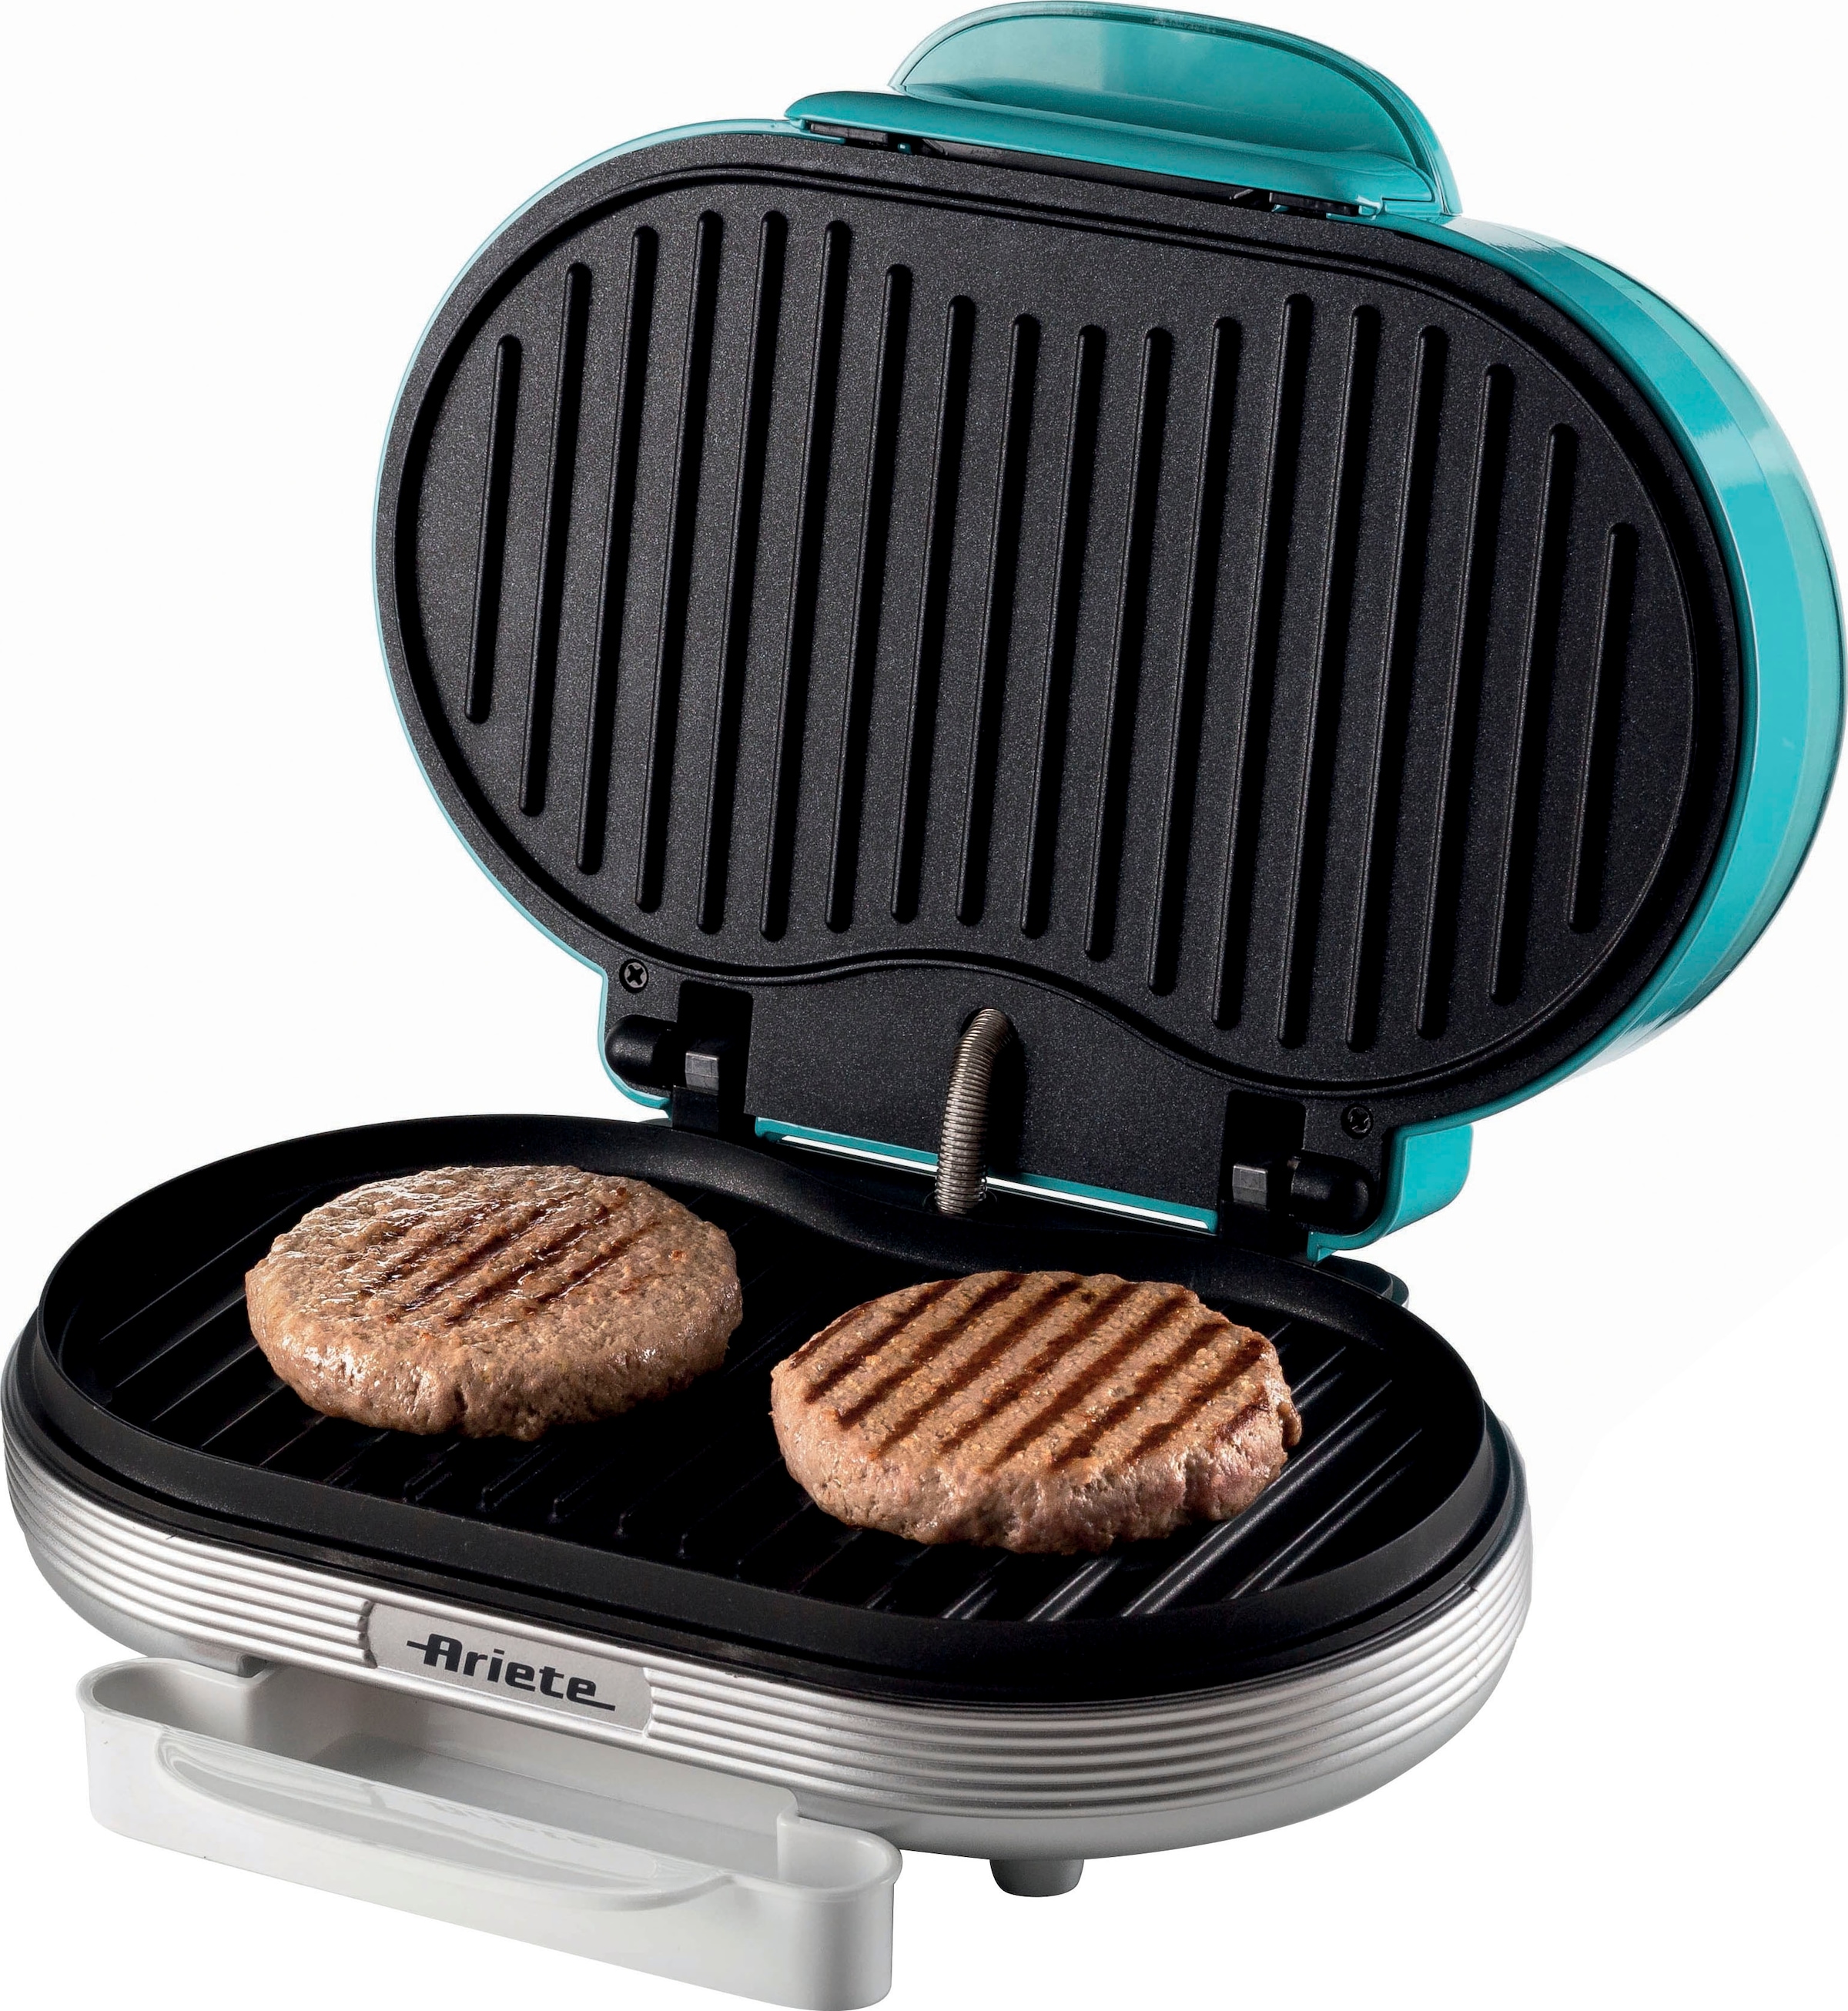 Ariete Hamburger Maker »205B Party Time Hambuger Maker, blau«, 1200 W